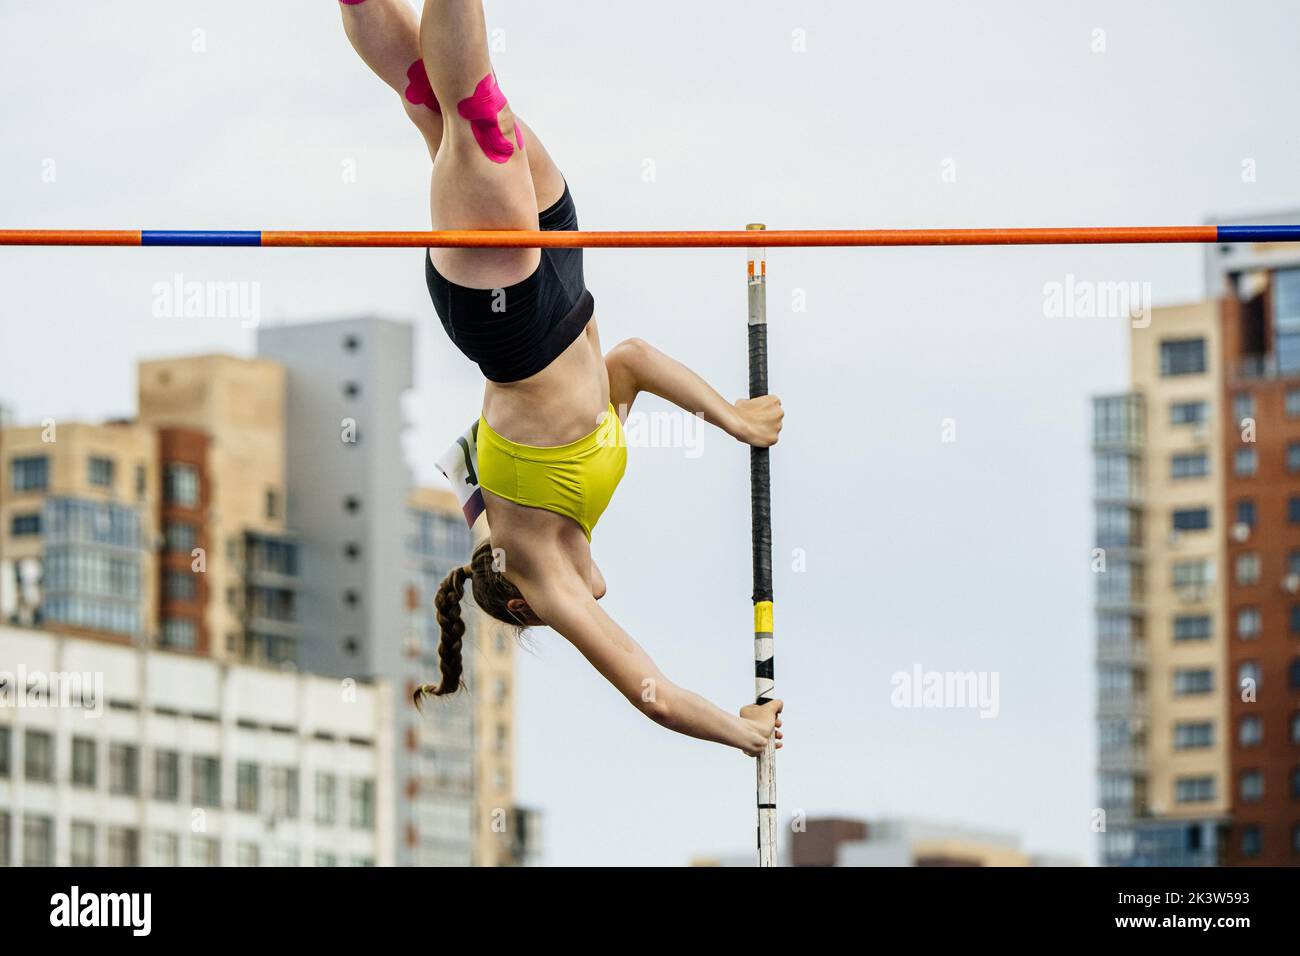 close-up female athlete pole vault on background of buildings Stock Photo